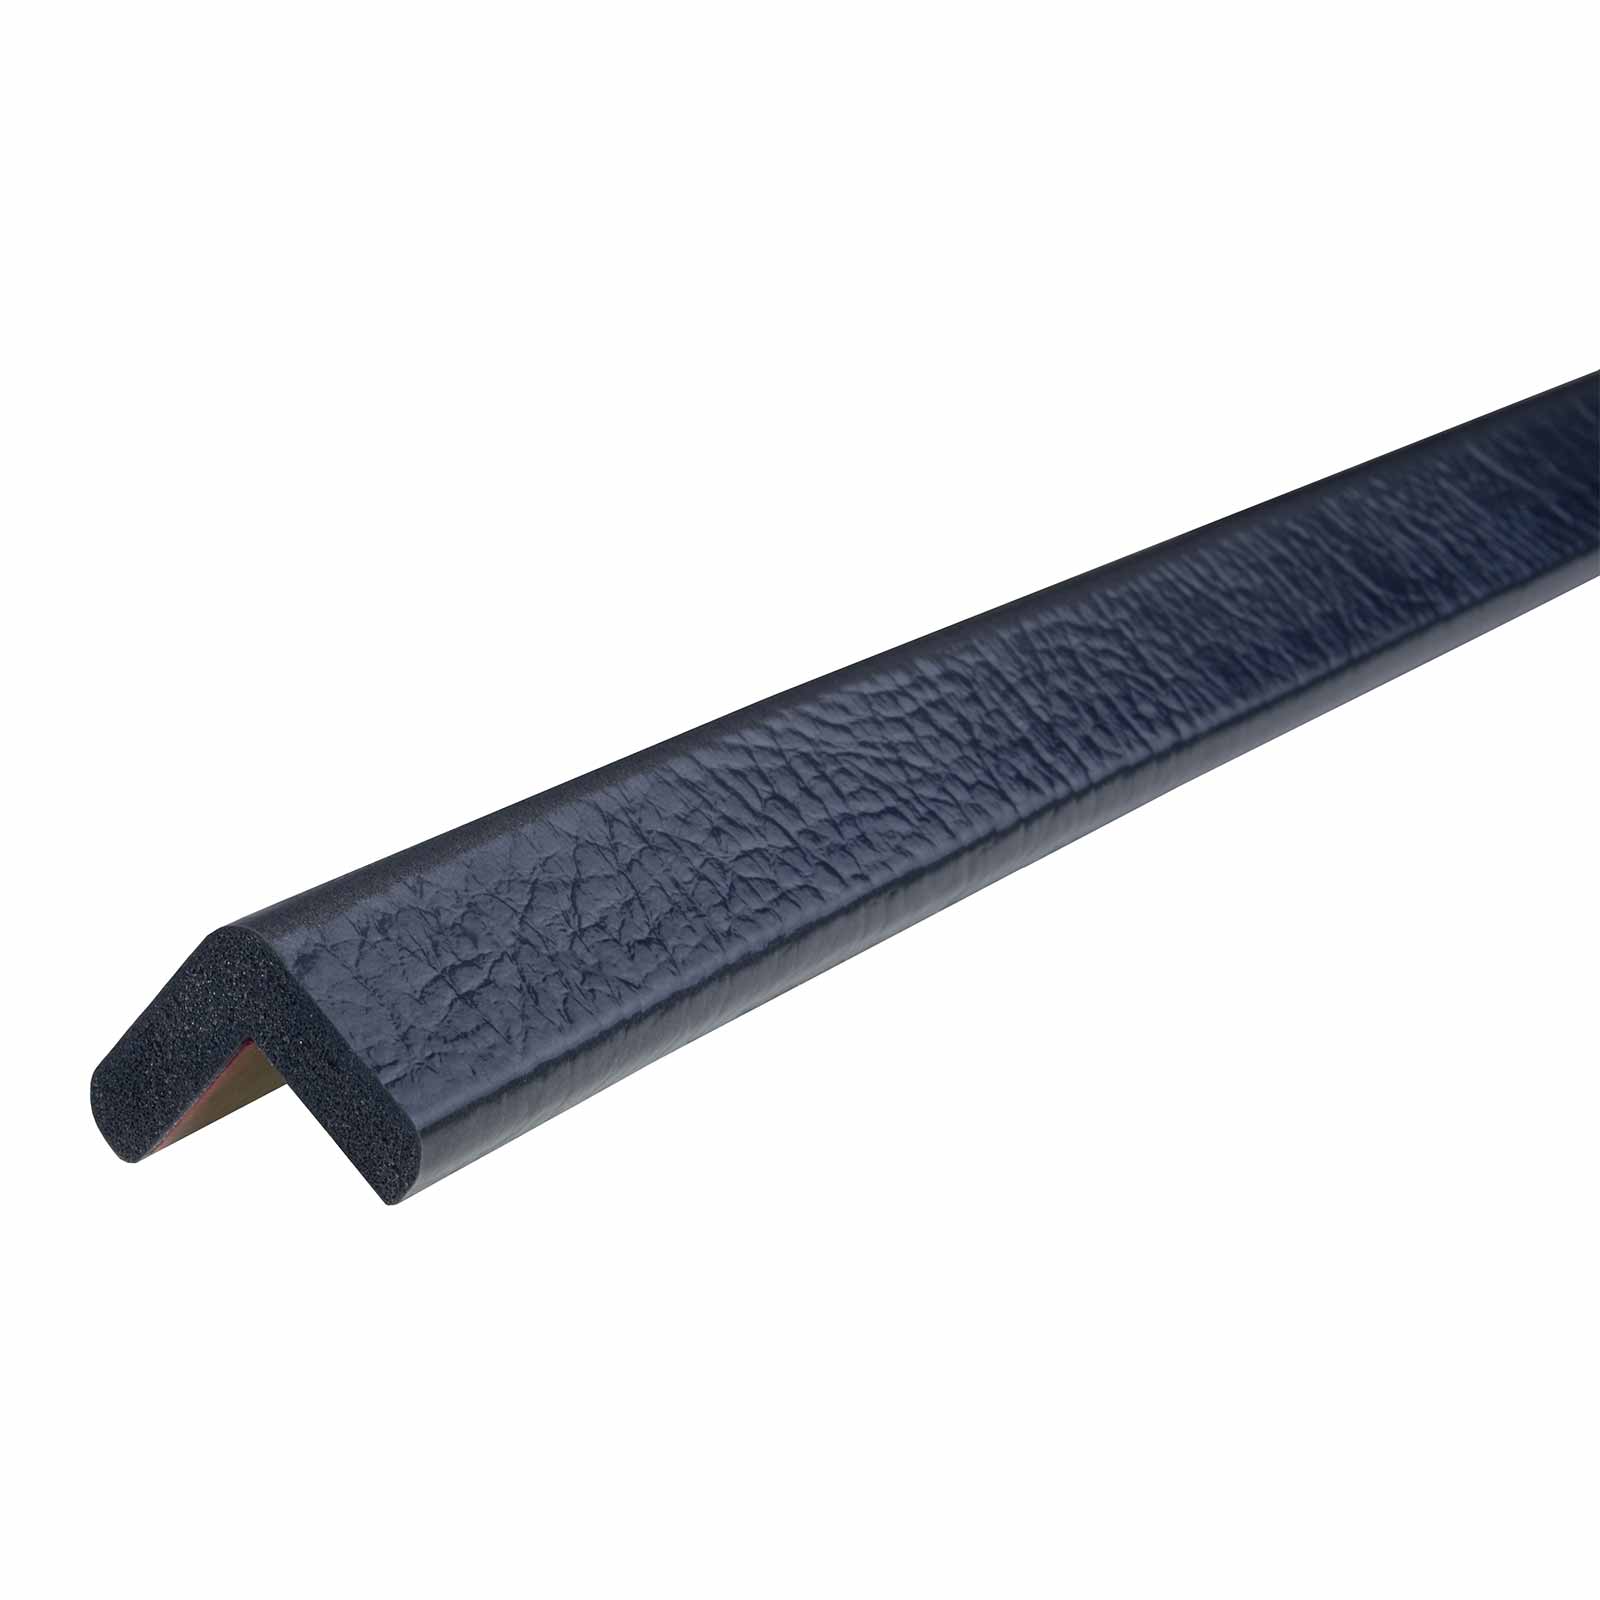 Knuffi Eckschutzprofil TypE selbstklebend 5m Kantenschutz Eckschutz Schutzprofil Farbe:anthrazit von Knuffi